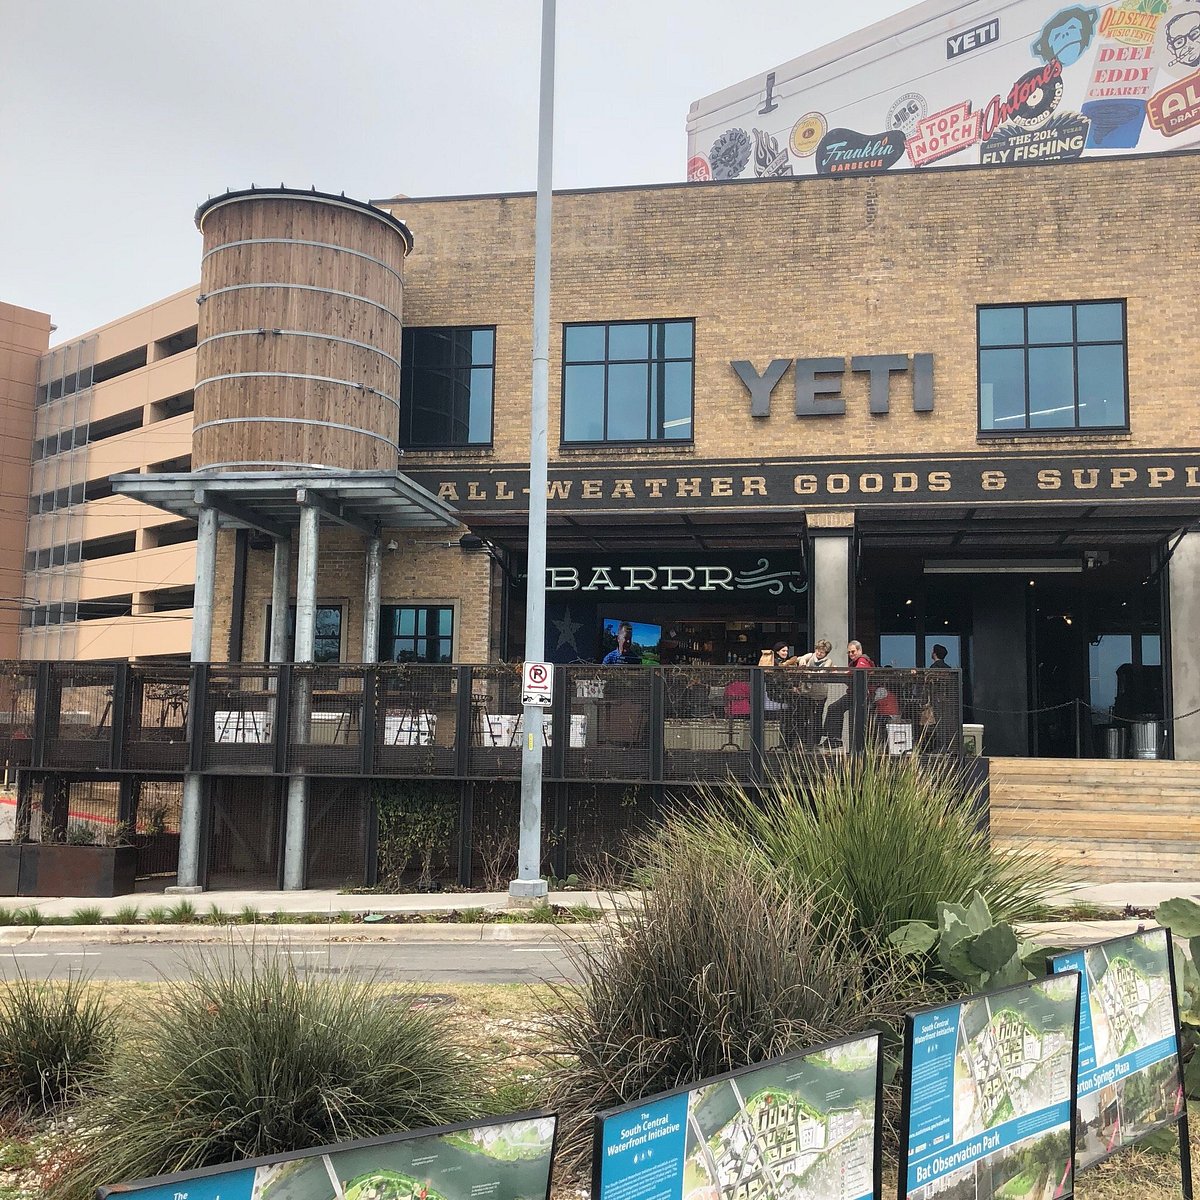 Yeti Opens Flagship Store in Austin, Texas